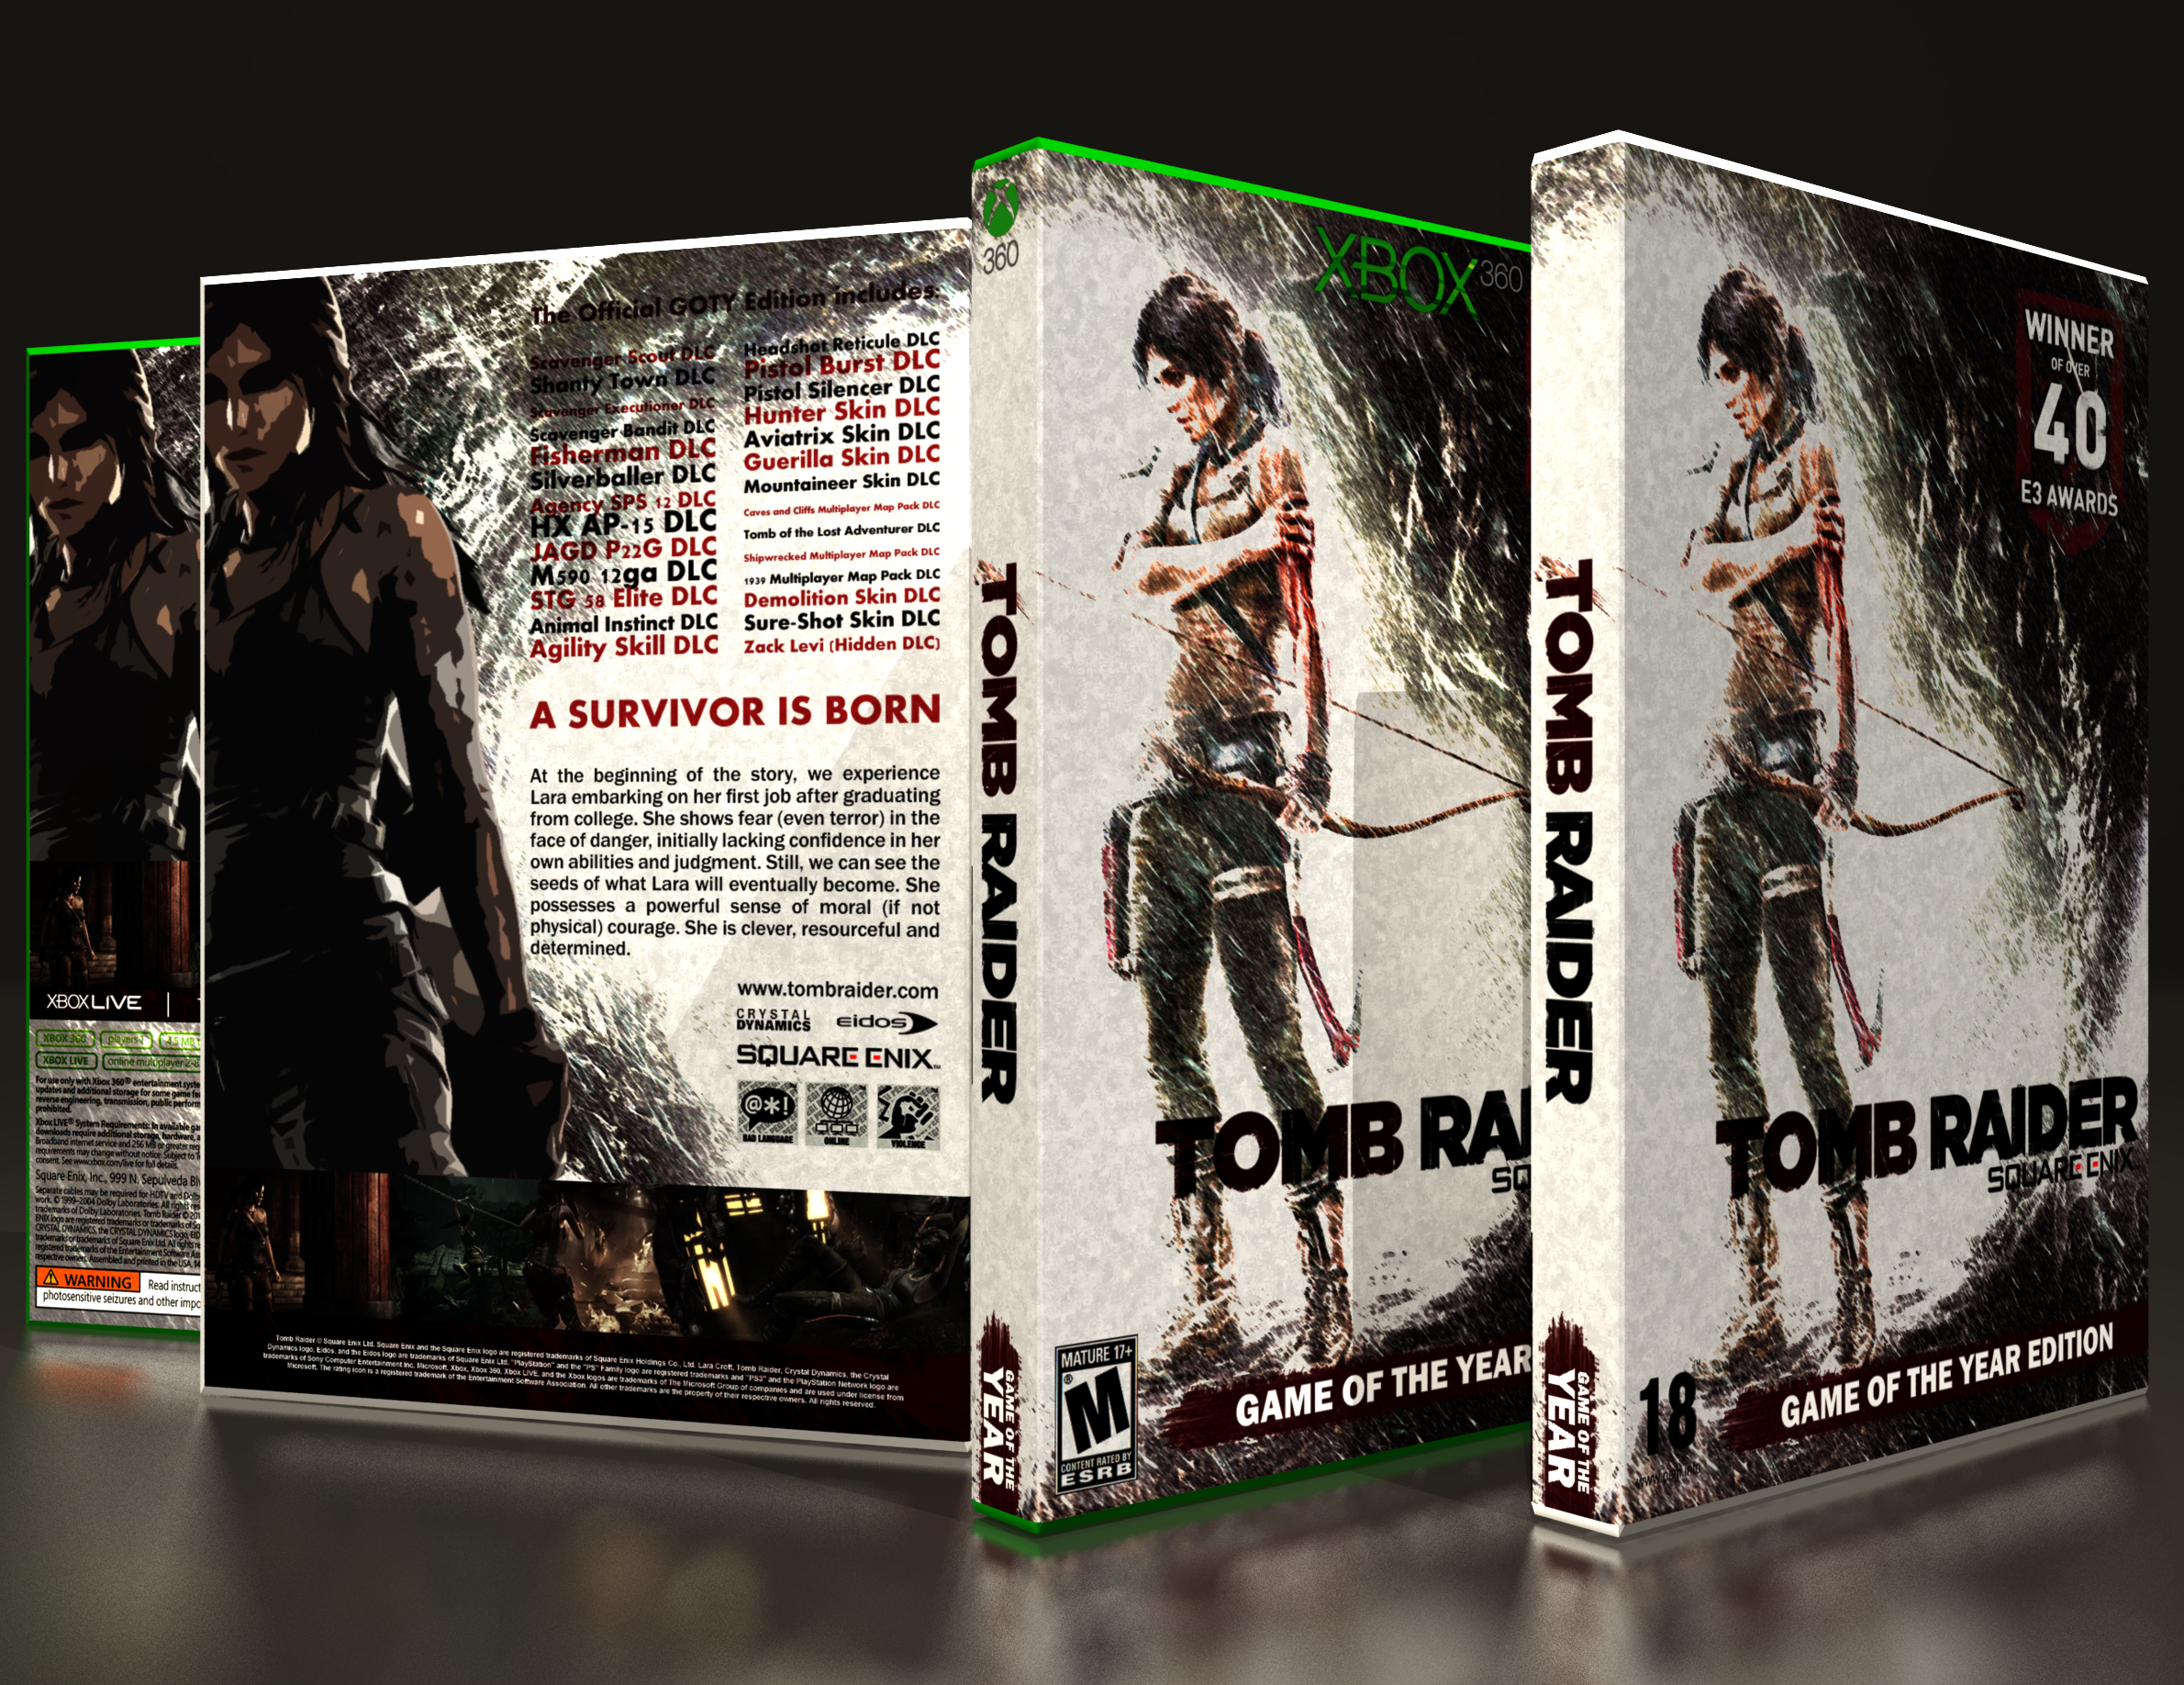 Tomb Raider GOTY box cover